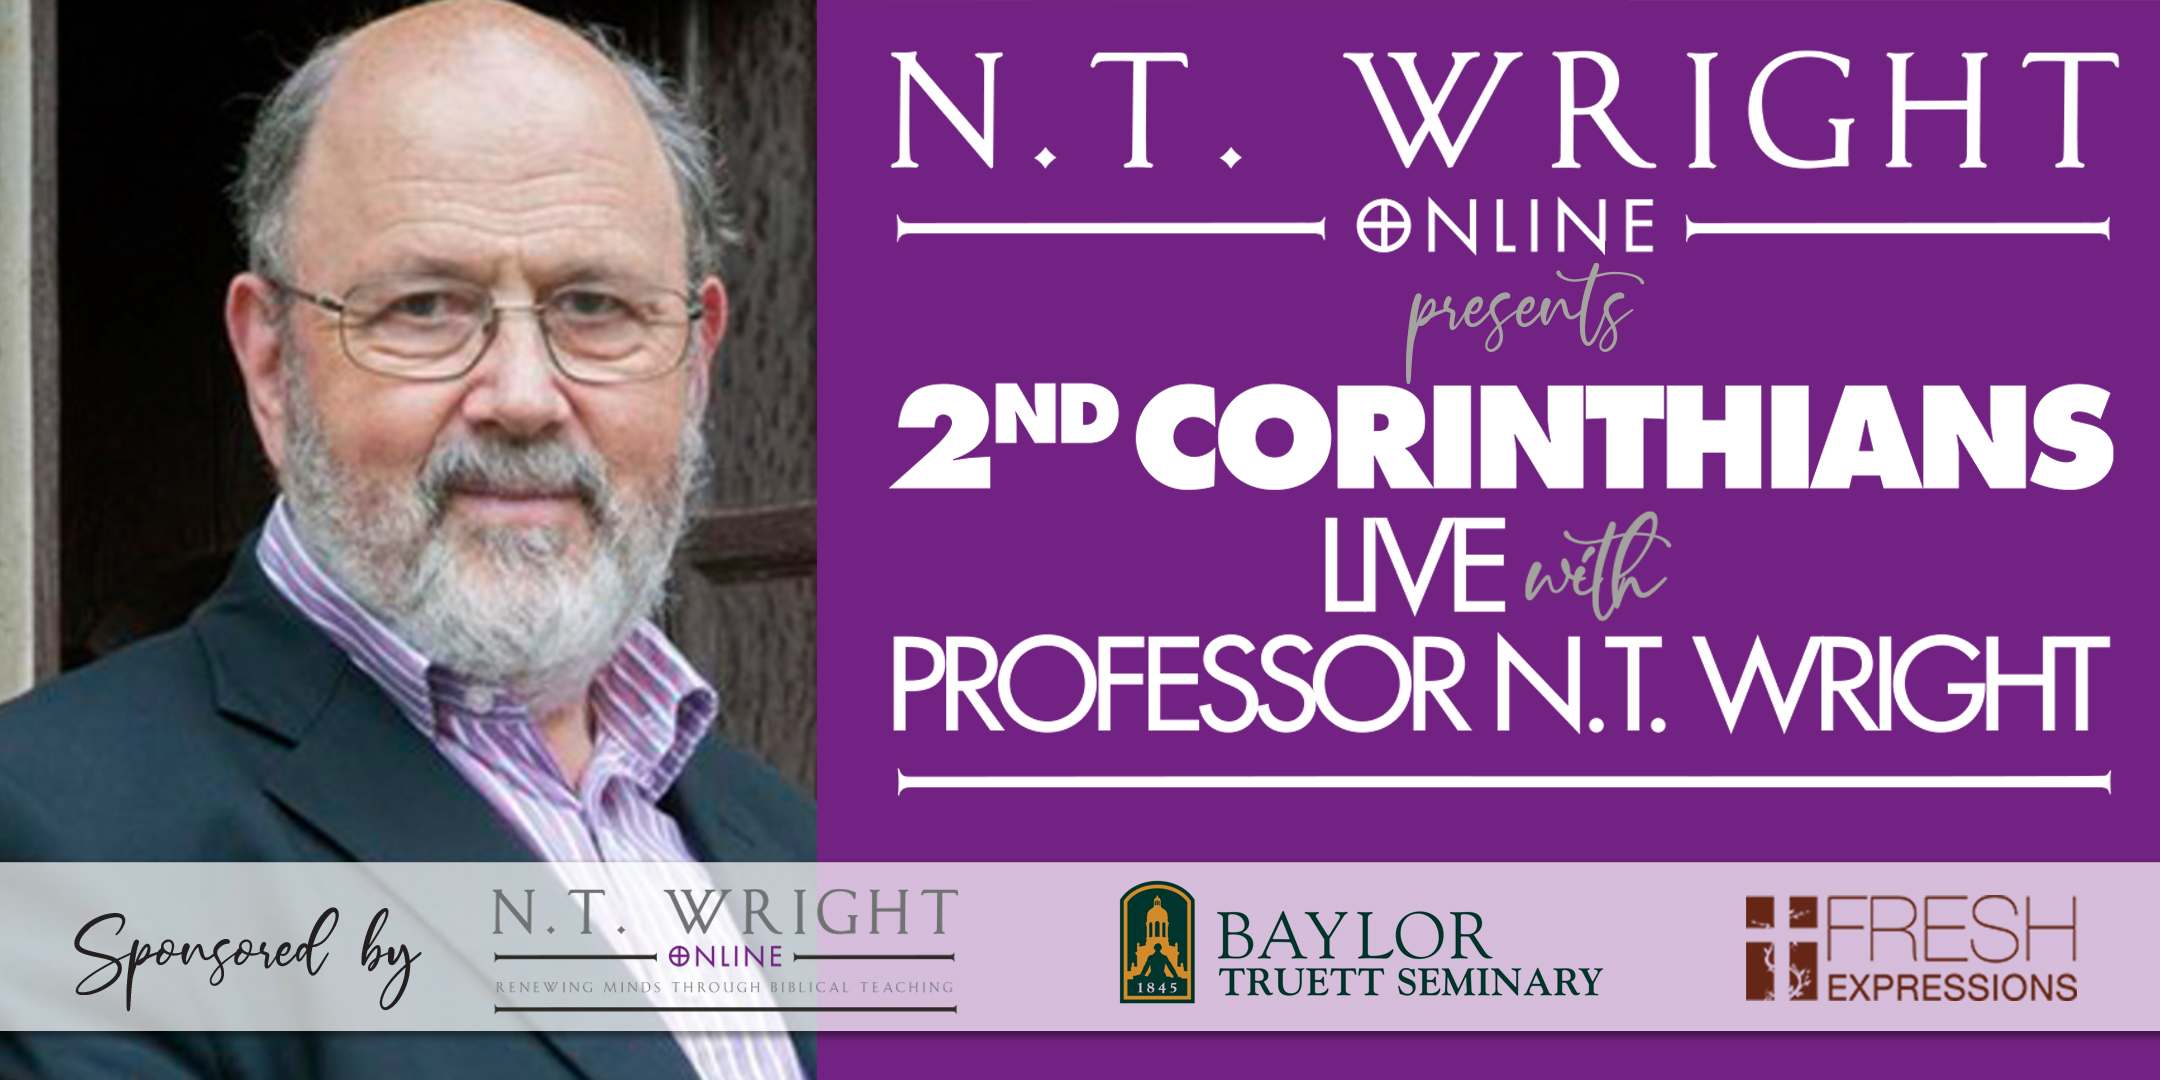 NT Wright Online 2nd Corinthians Livestream